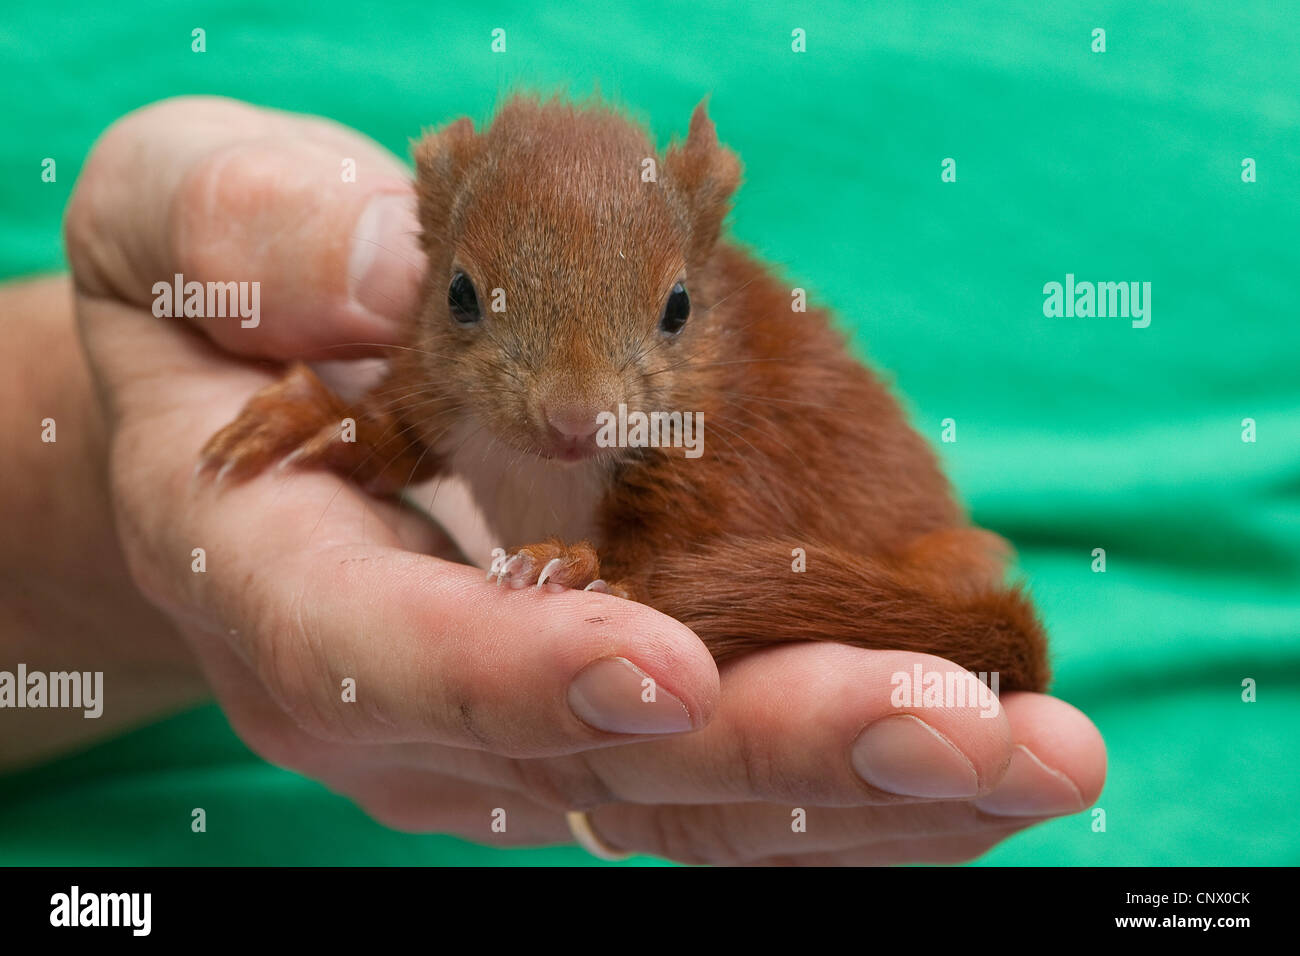 European red squirrel, Eurasian red squirrel (Sciurus vulgaris), orphaned pup sitting on hands, Germany Stock Photo